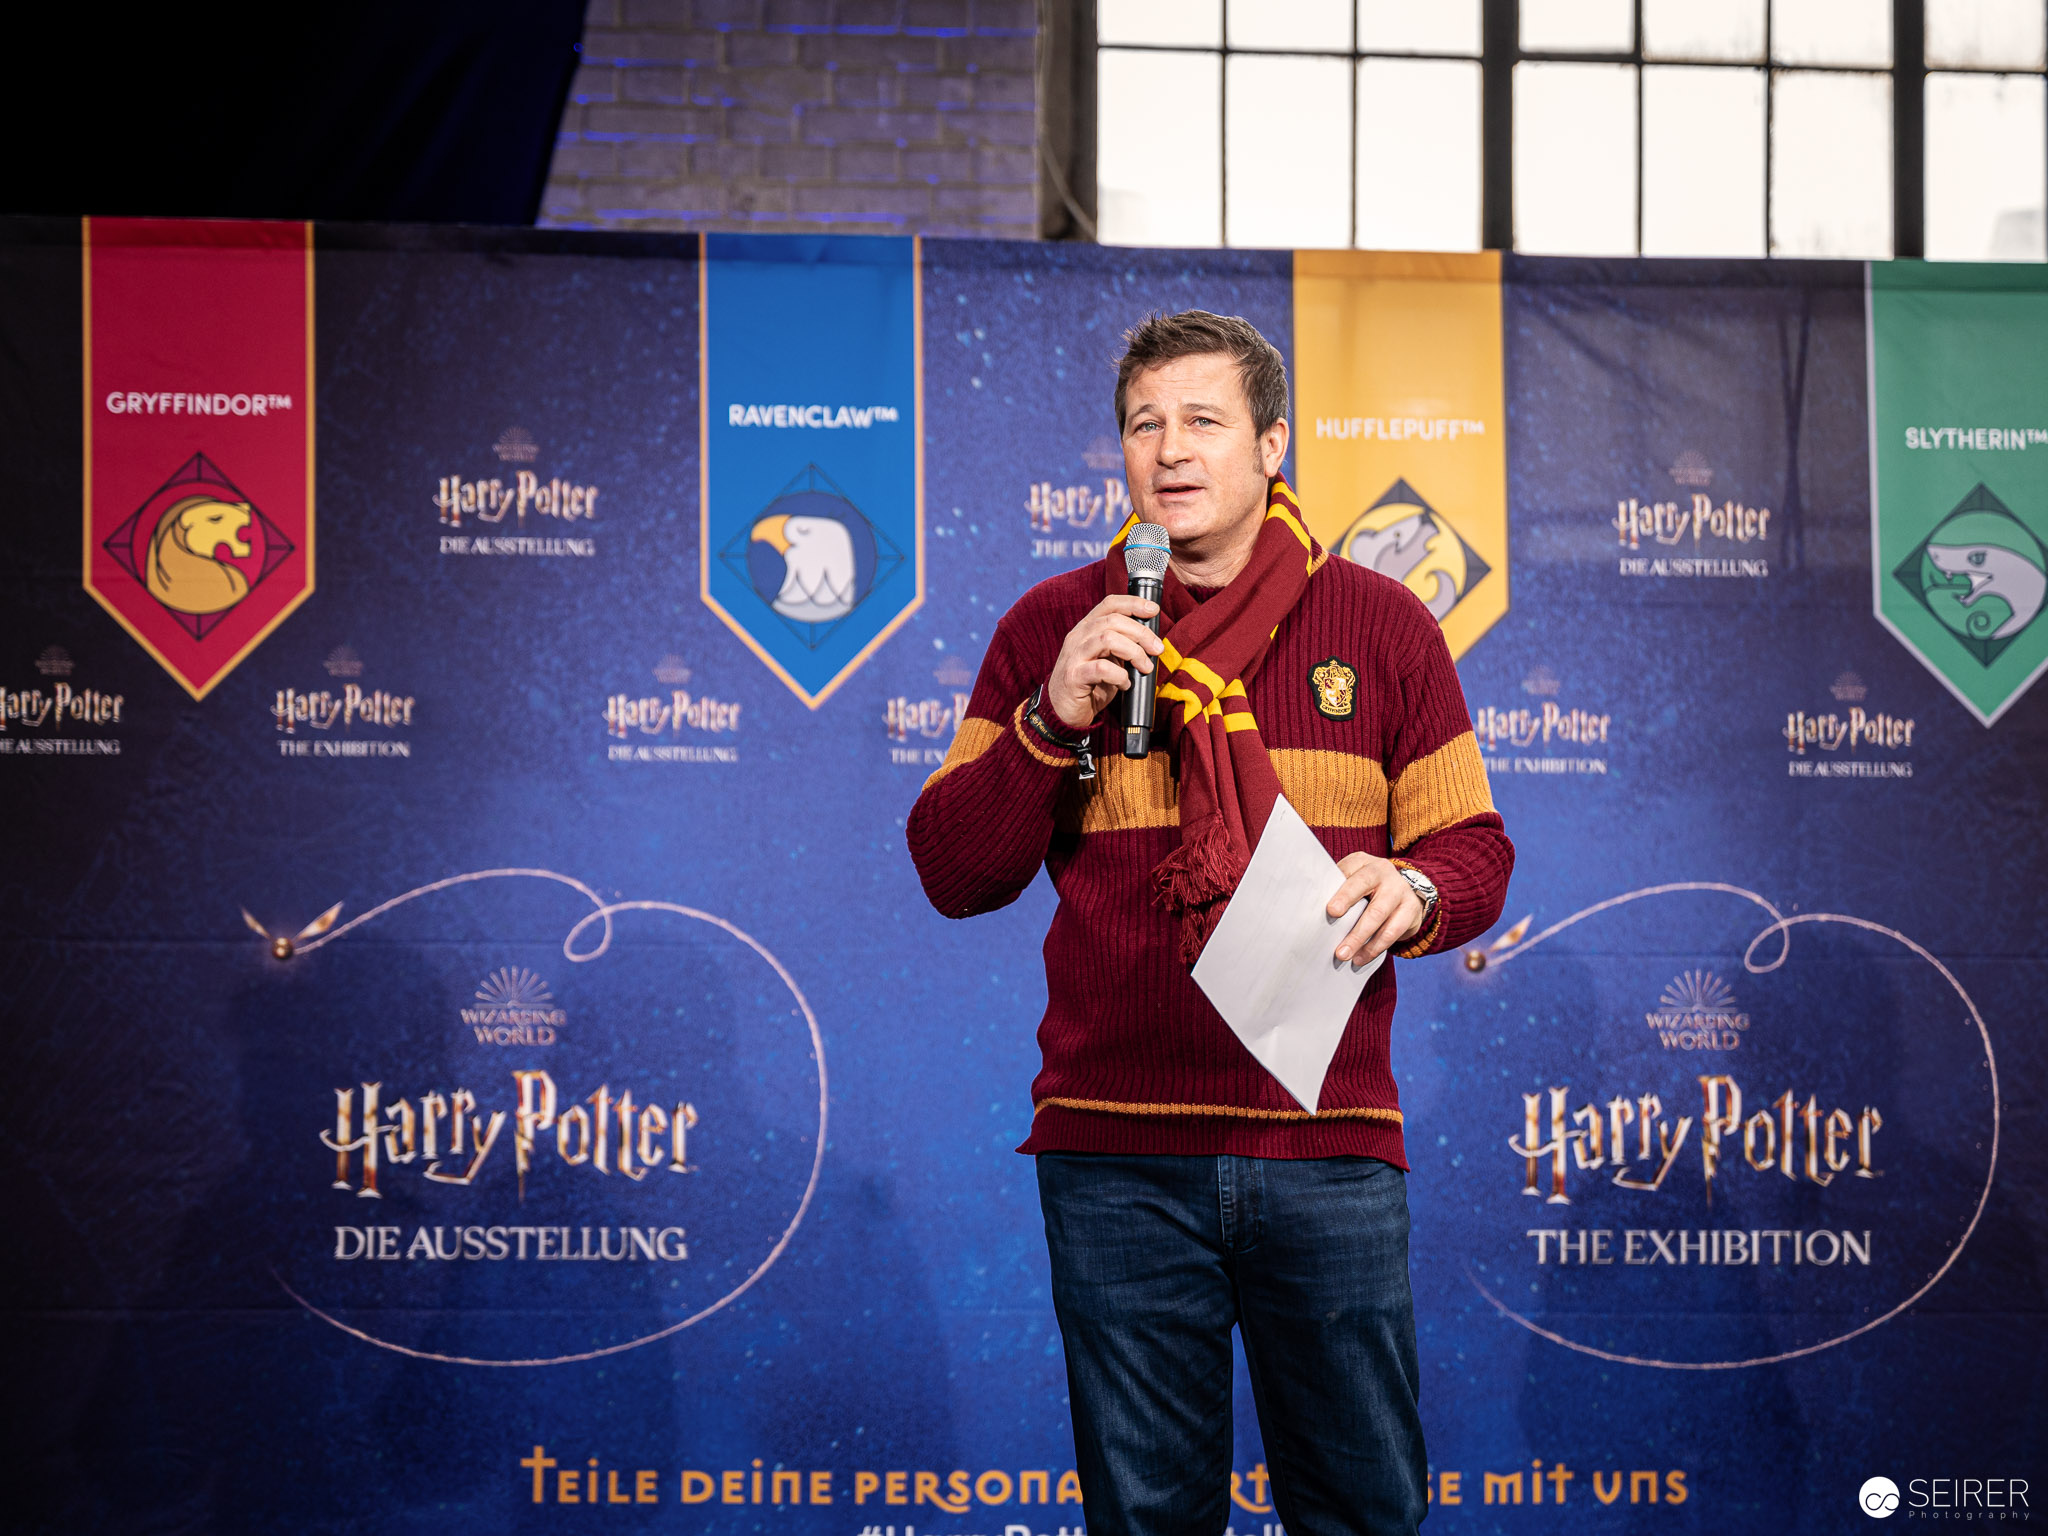 Harry Potter Ausstellung in Wien Metastadt